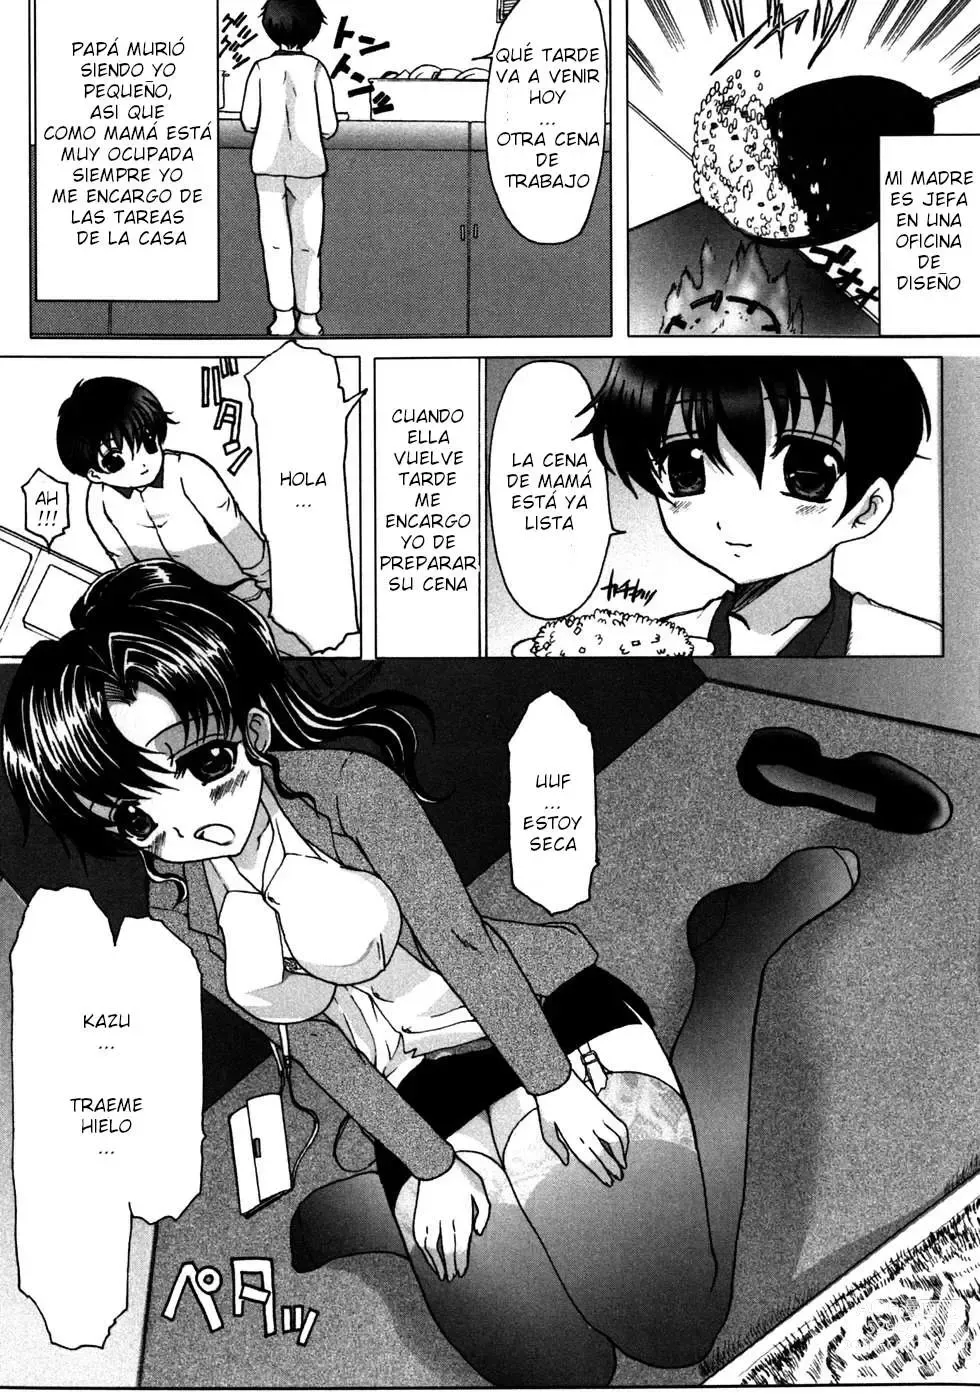 Page 3 of manga Alcohol Panic